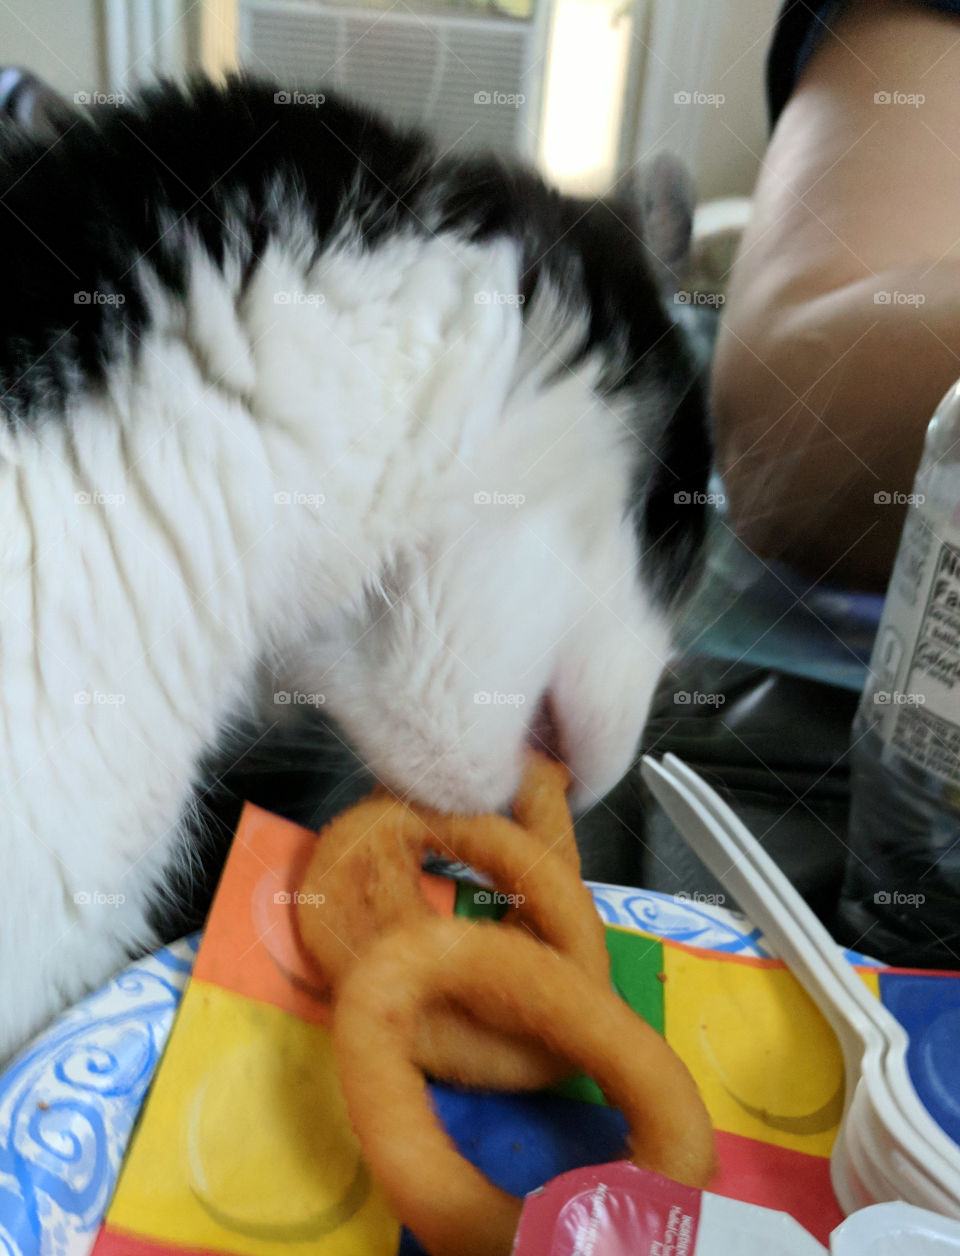 Cat stole my onion ring! Jerk!